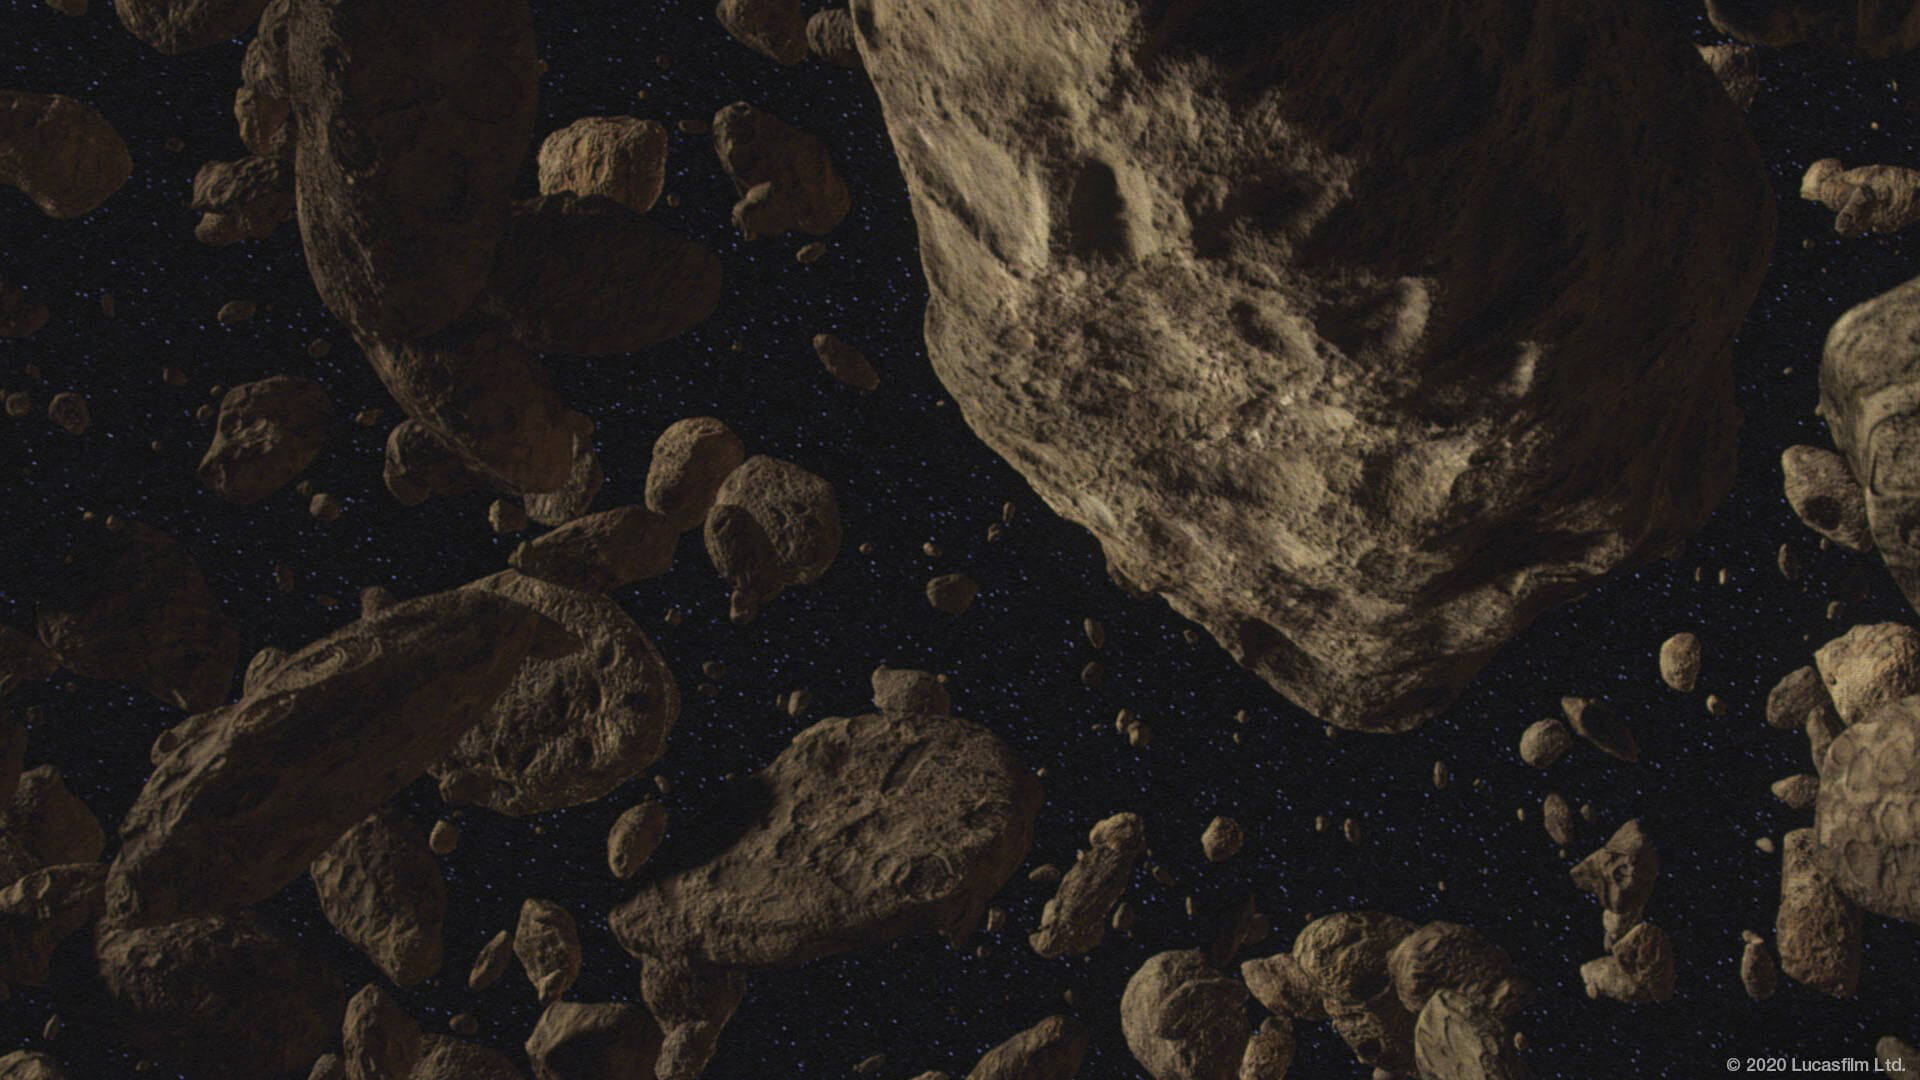 Background Asteroid Field By Star Wars Wallpaper